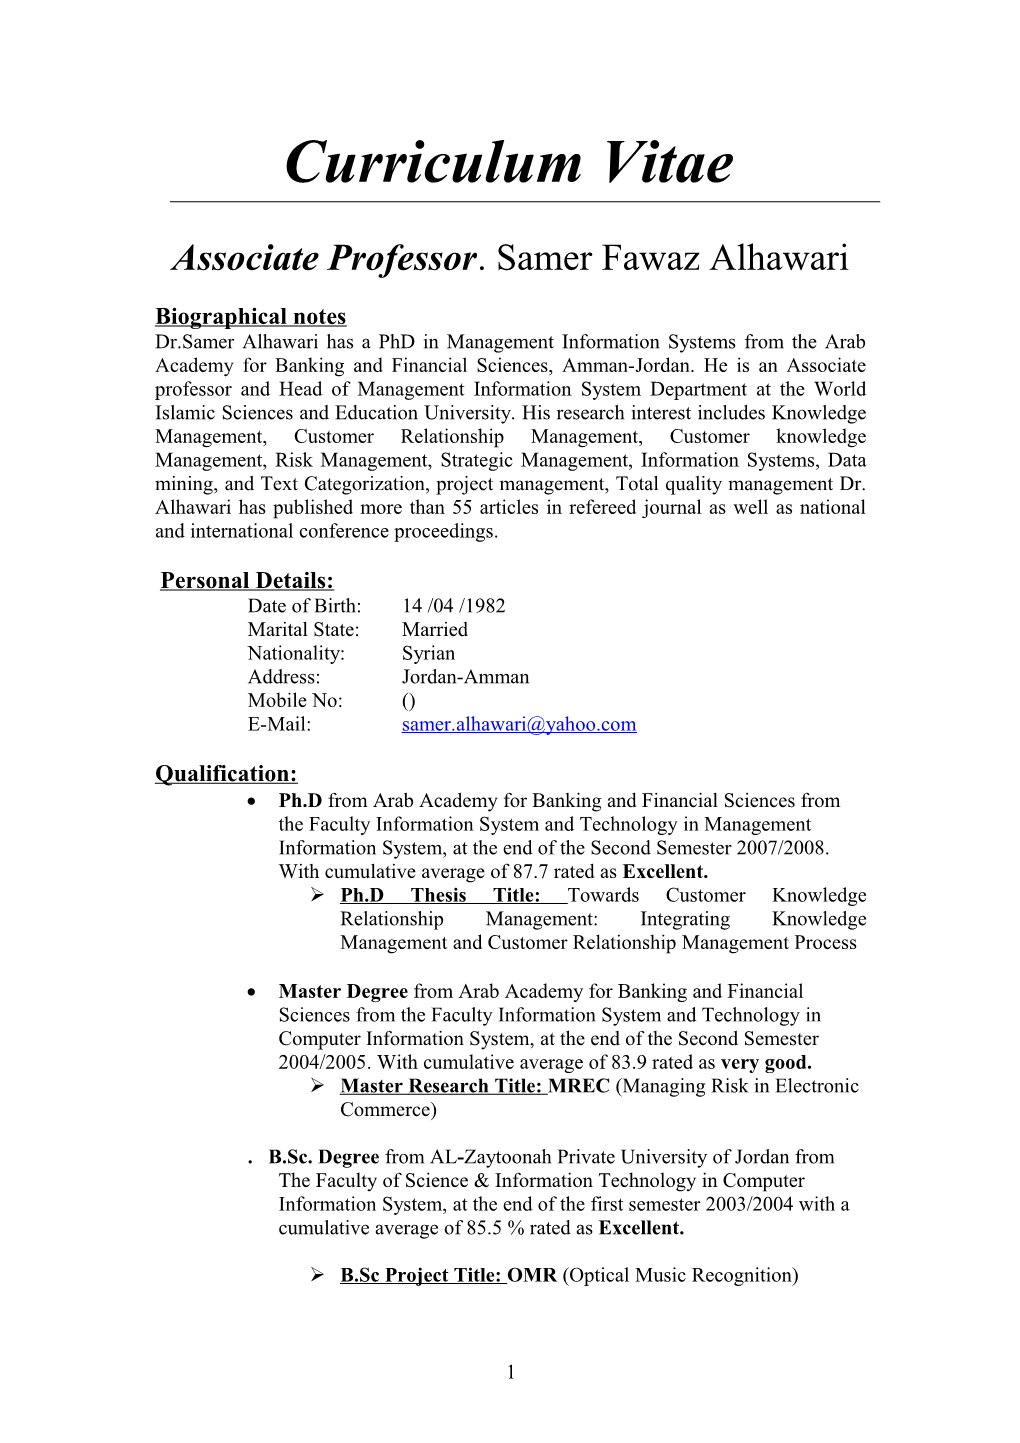 Associate Professor . Samer Fawaz Alhawari